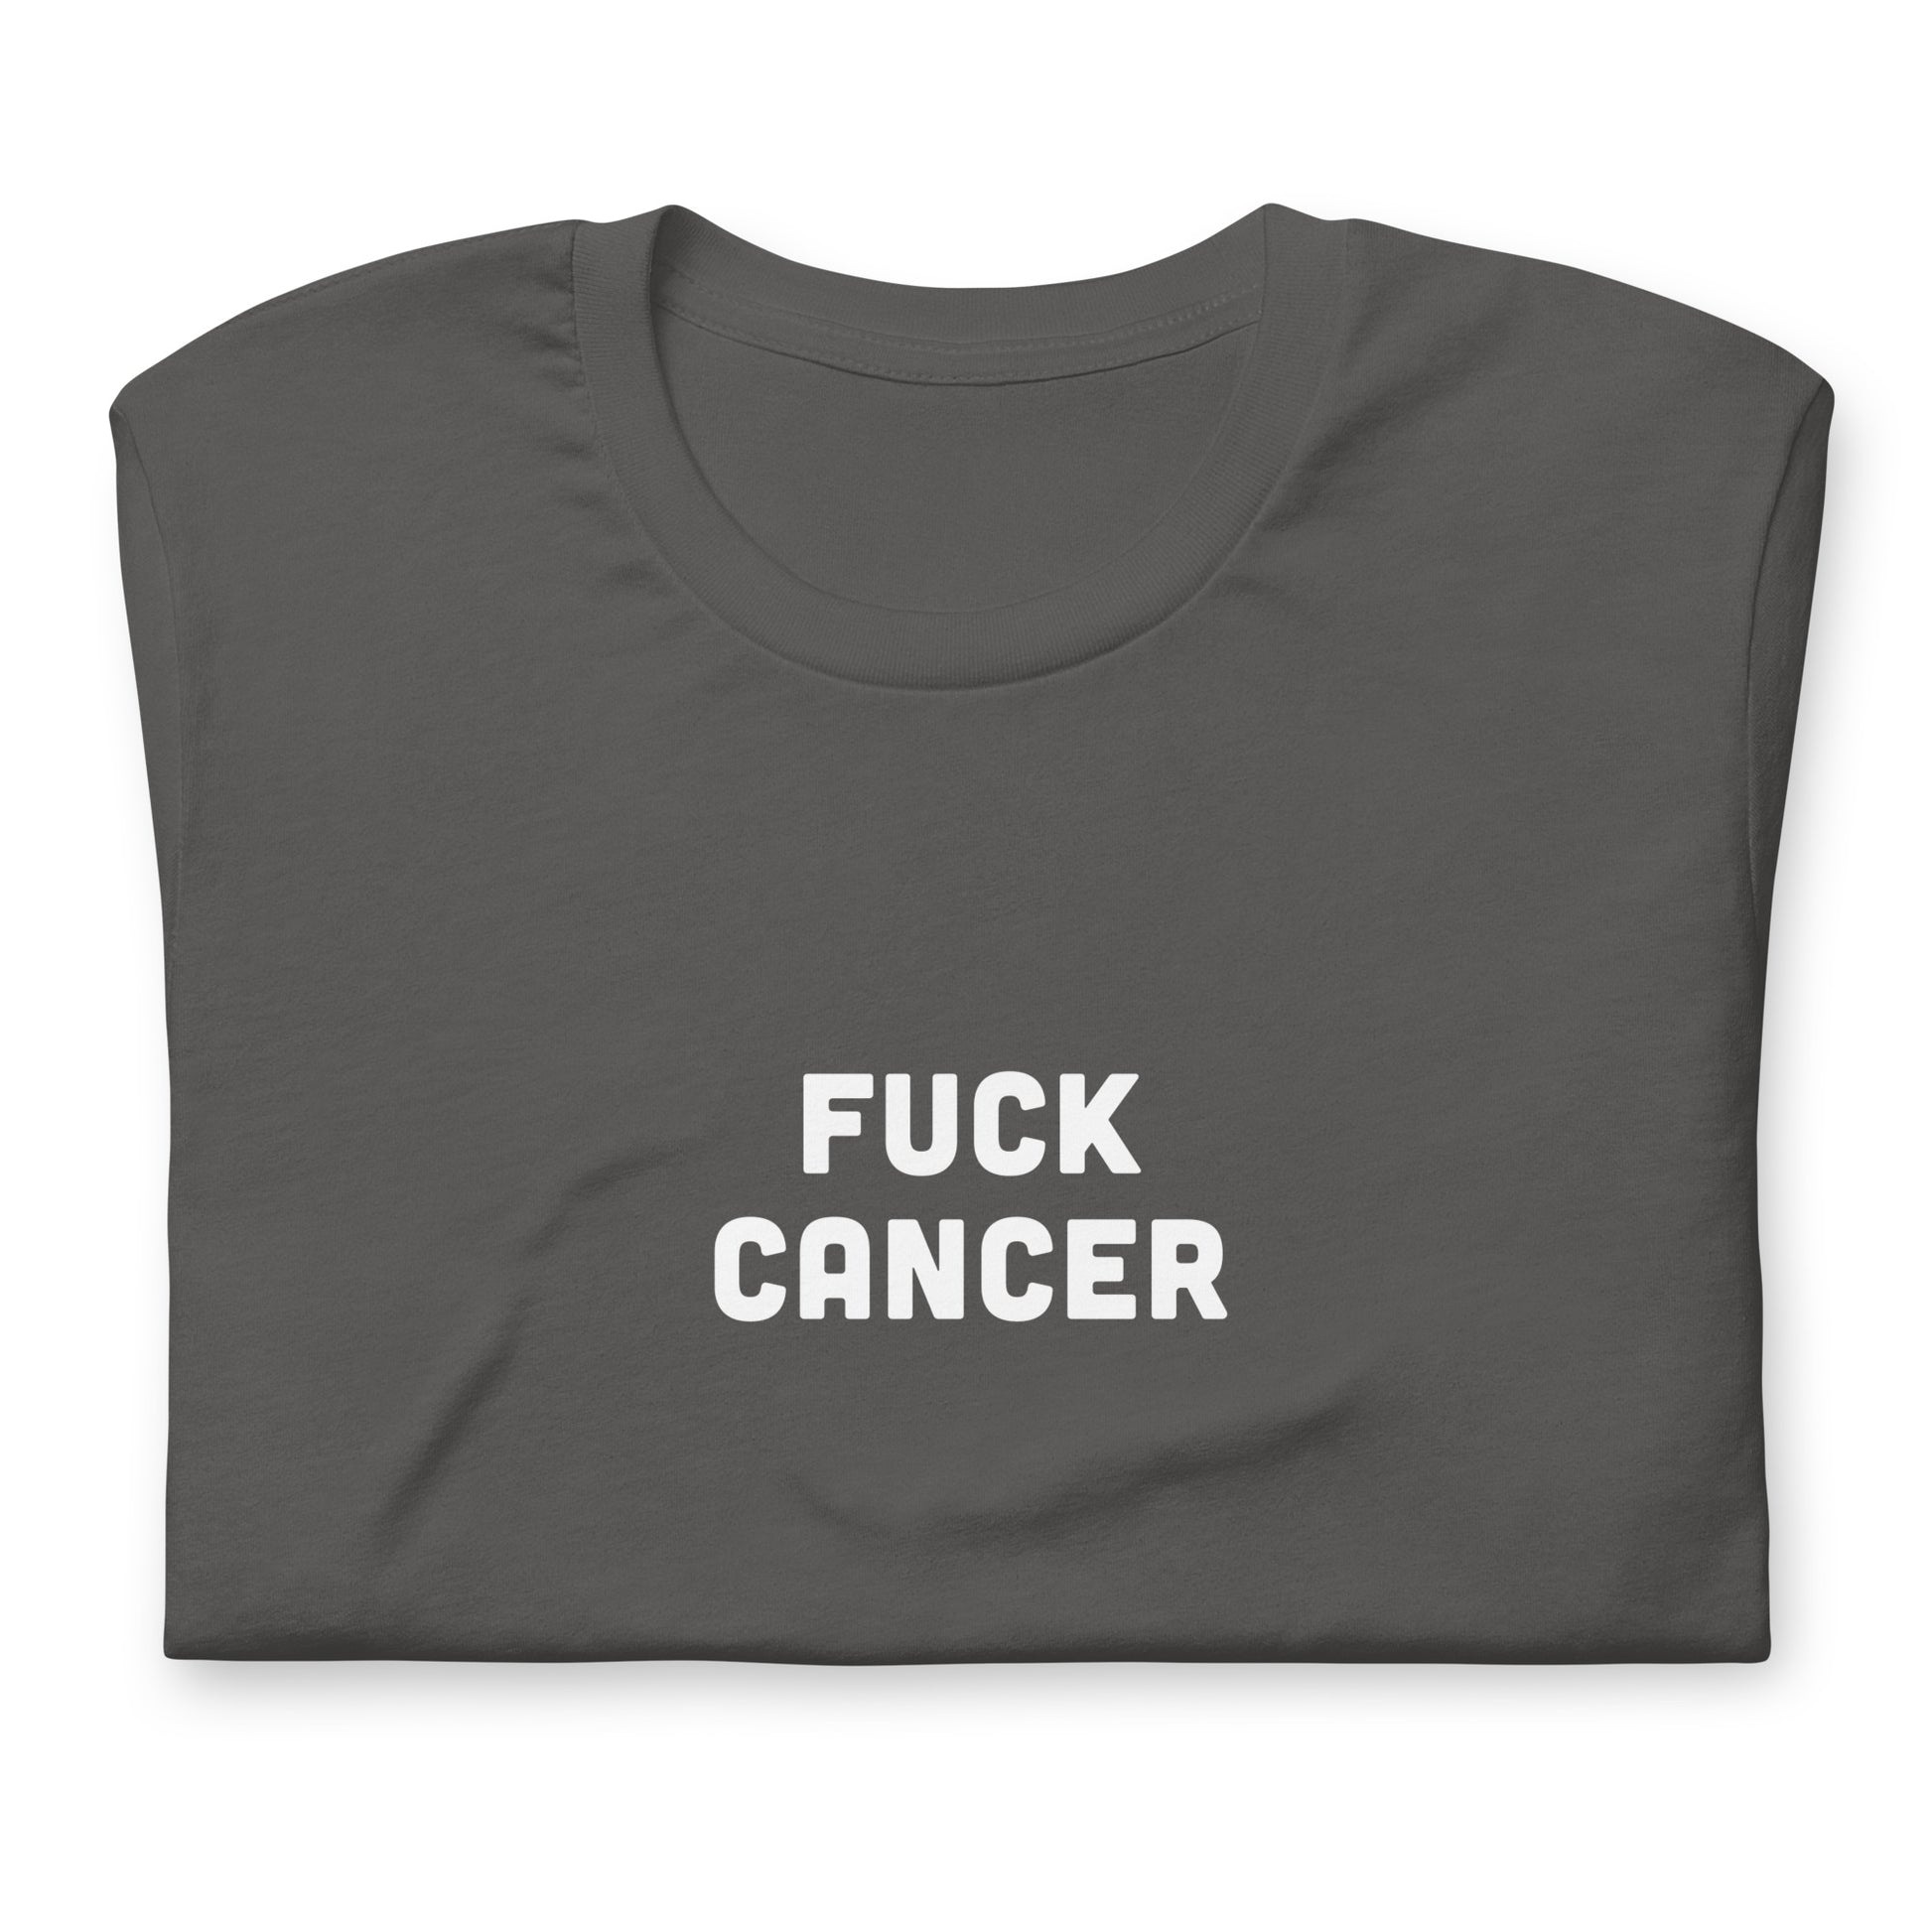 Fuck Cancer T-Shirt Size XL Color Black